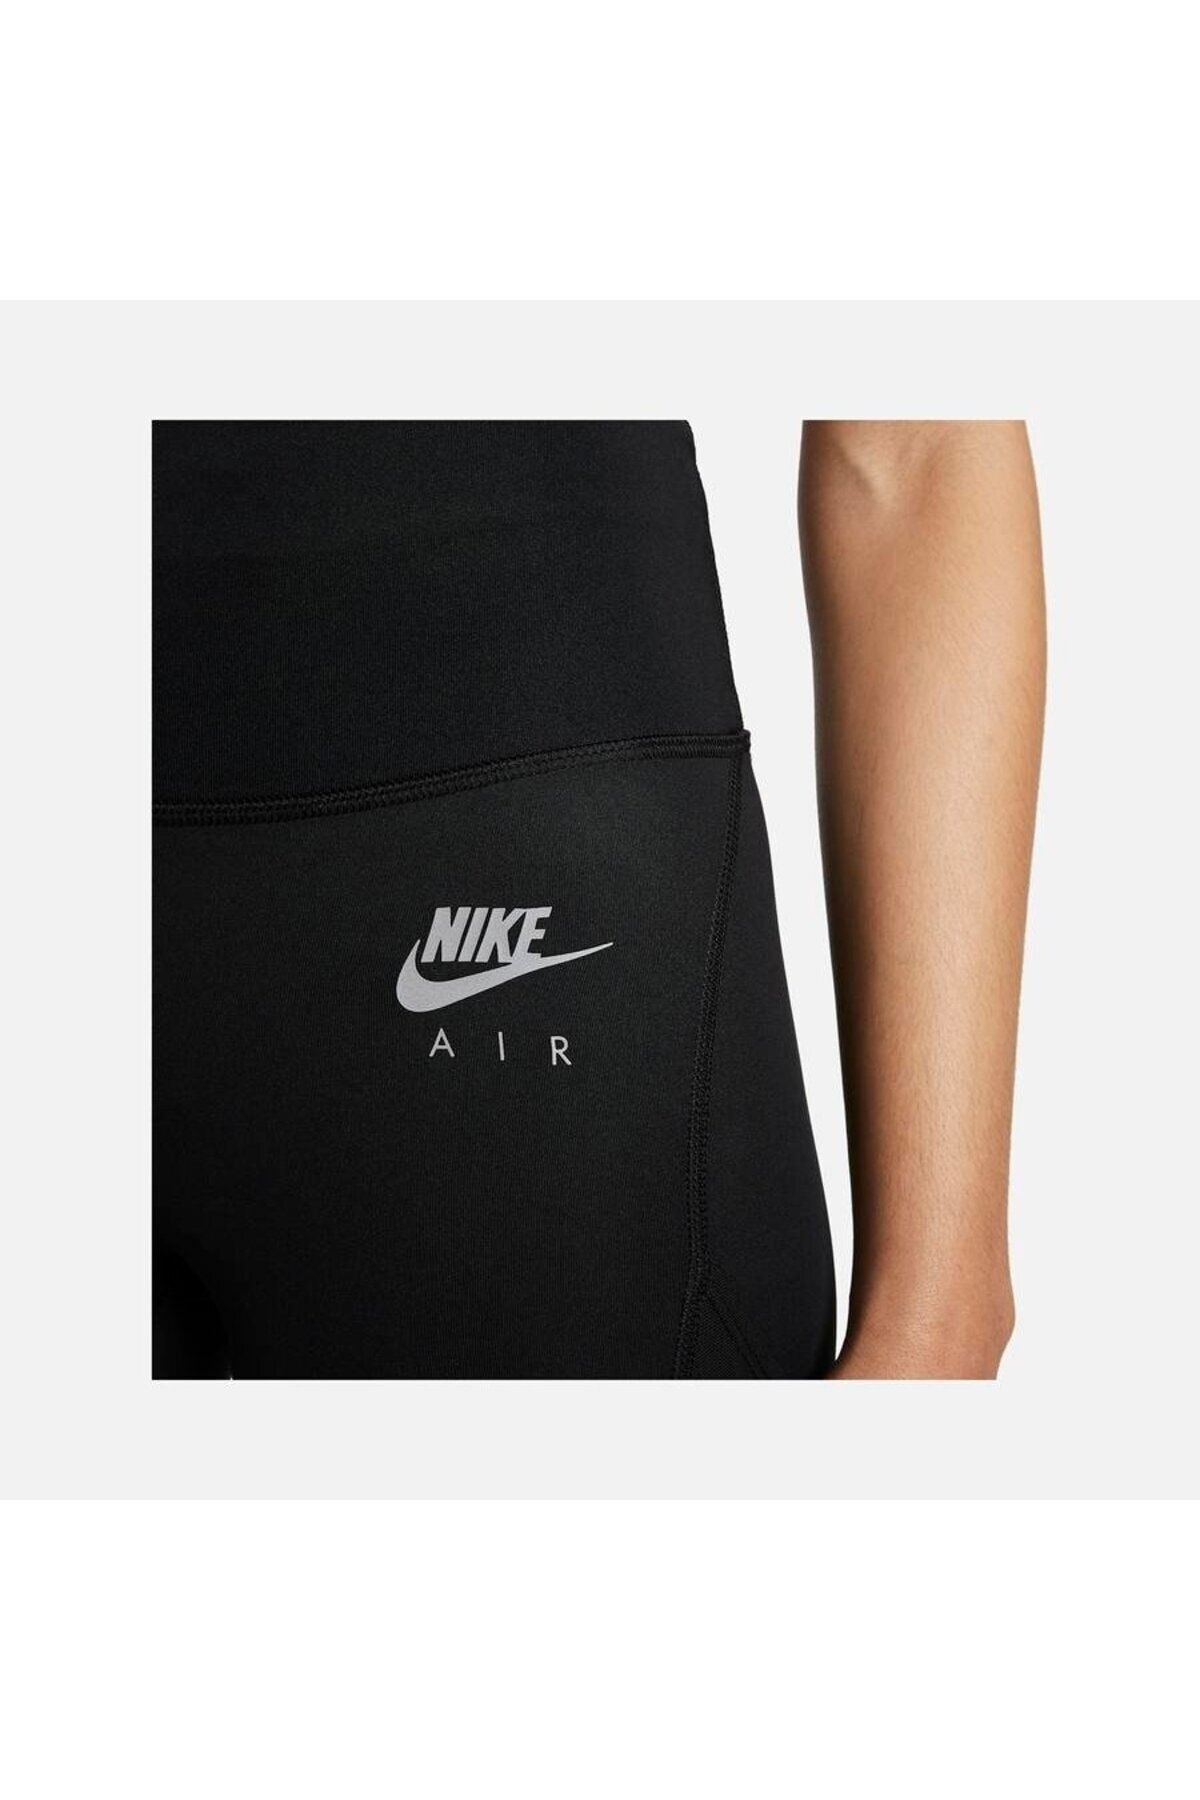 Nike Women's Dri-FIT Fold-Over Waist 7/8 Leggings DD4052-010 Black Size XS  New